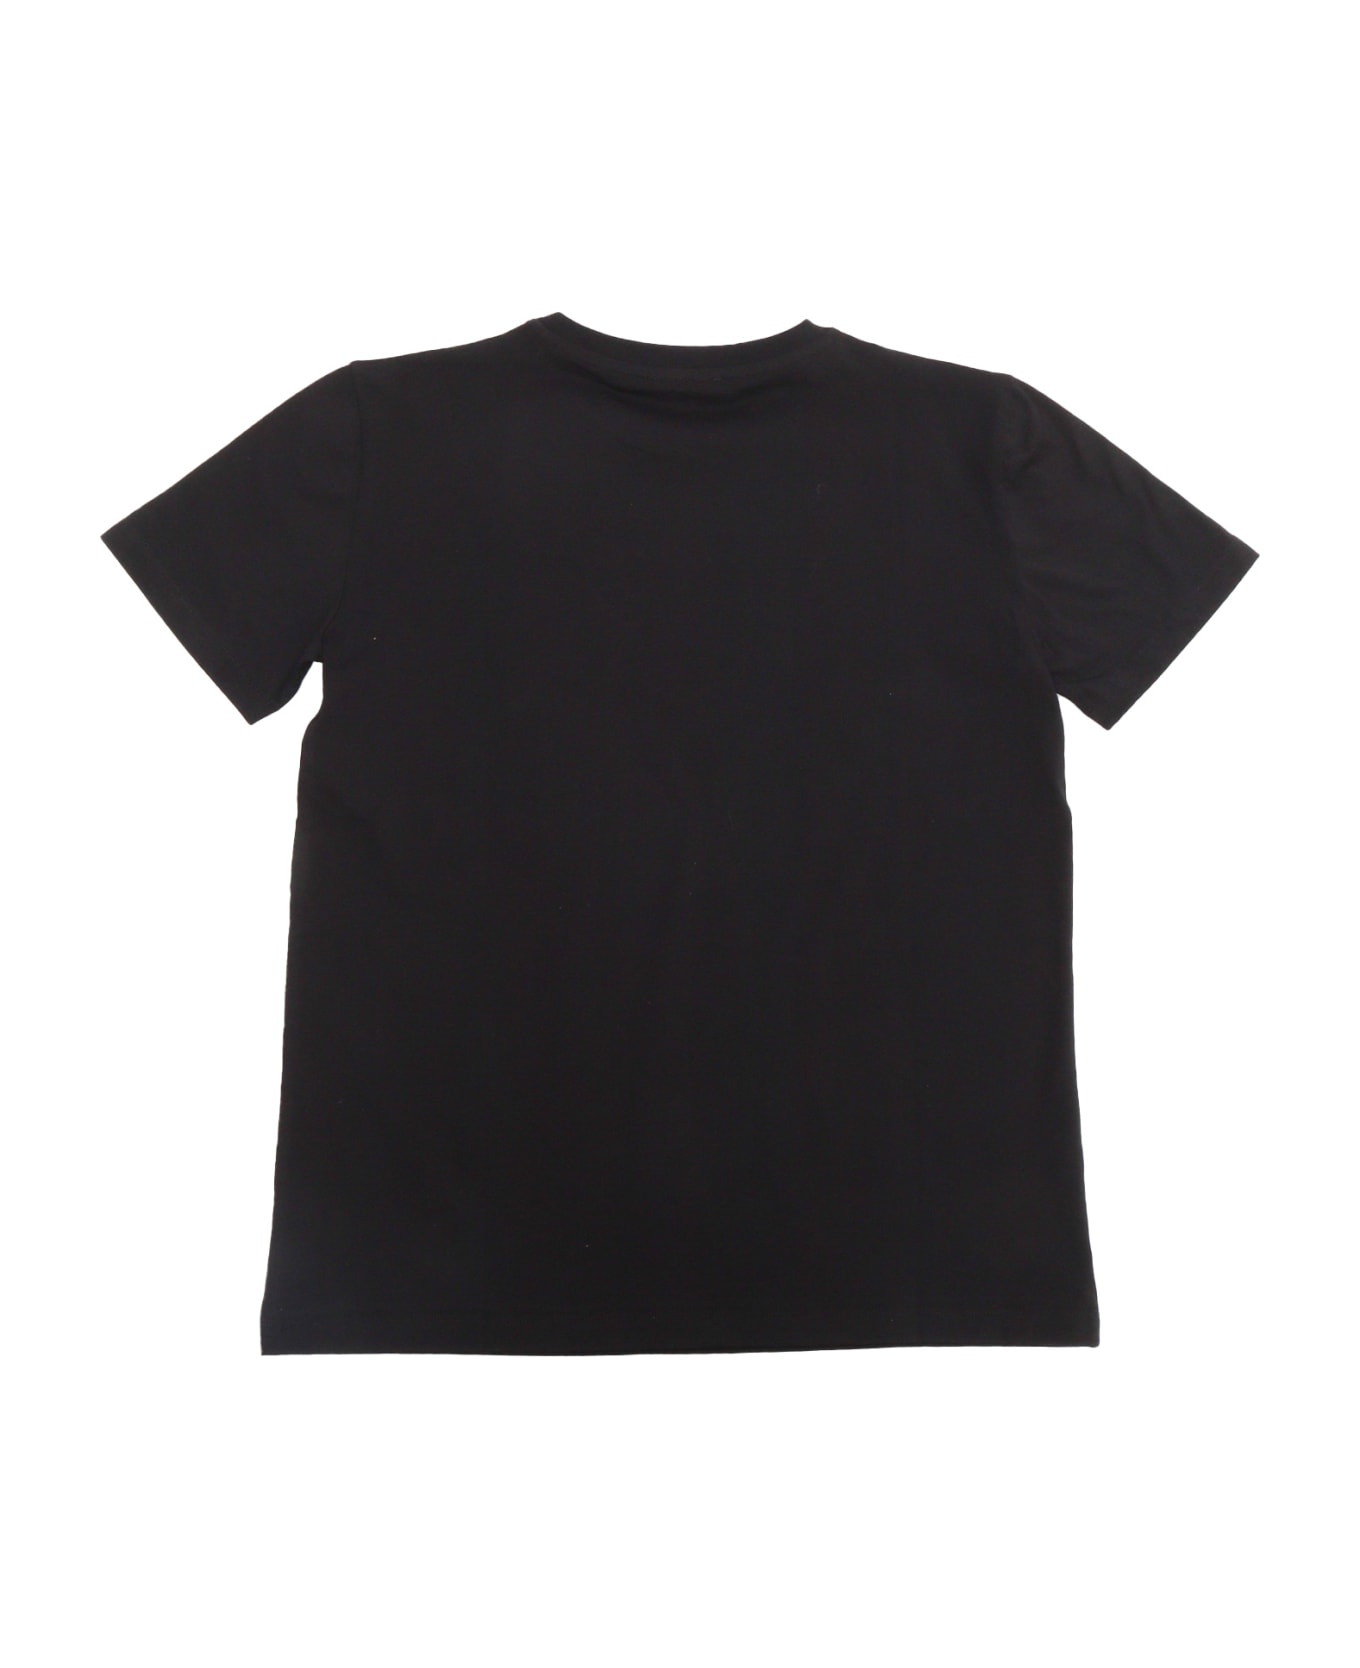 Balmain Black T-shirt With Logo - BLACK